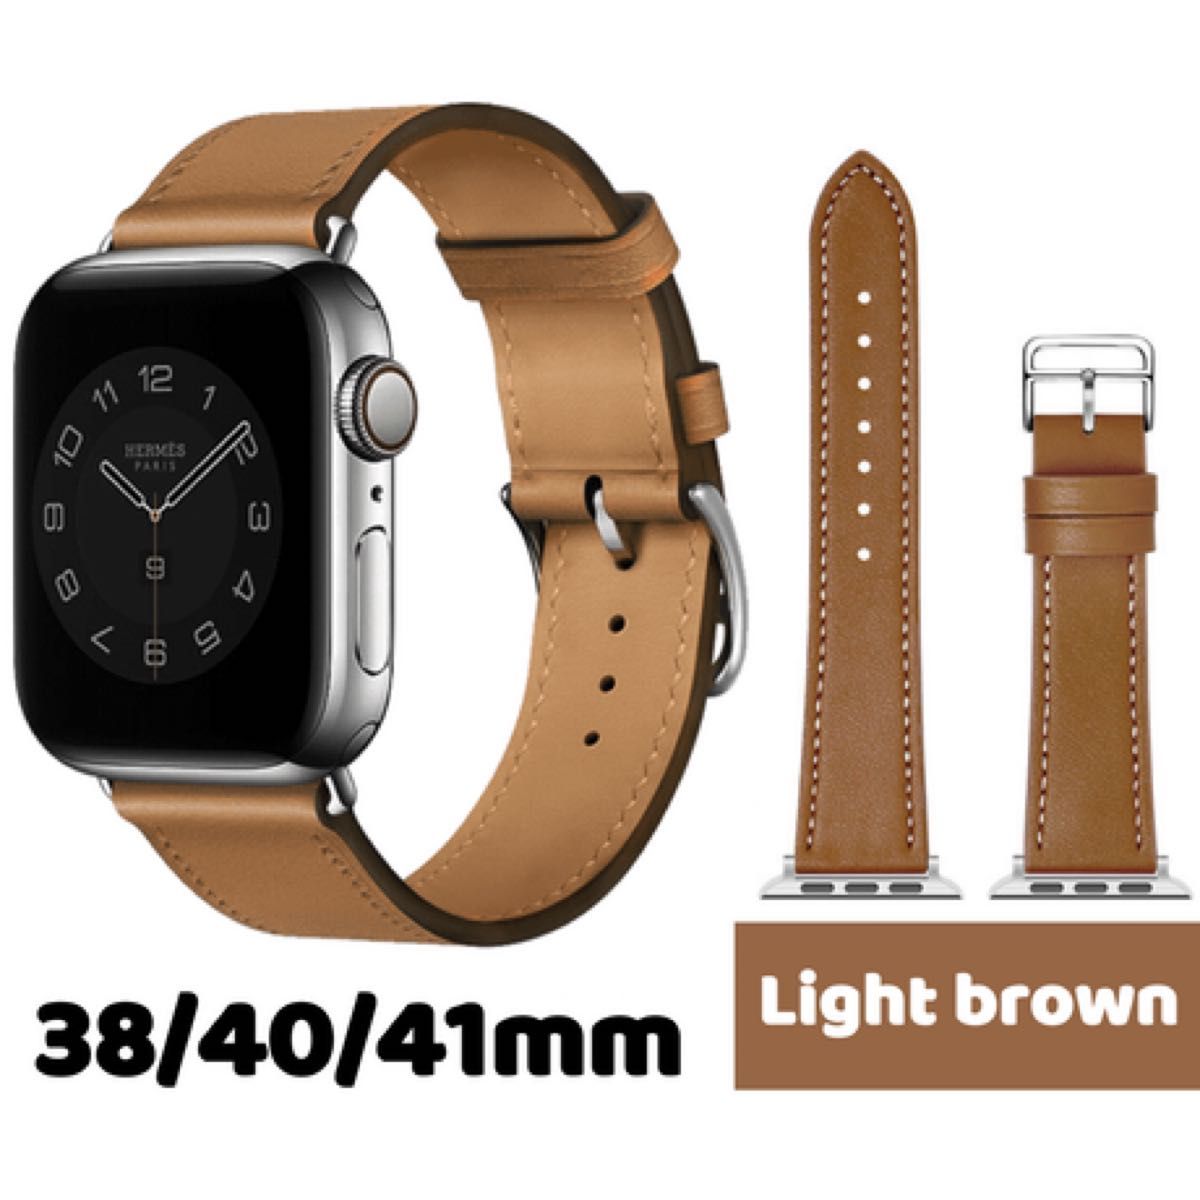 Apple Watch レザーバンド 合皮レザー 38/40/41mm ライトブラウン レザーストラップ アップルウォッチバンド 